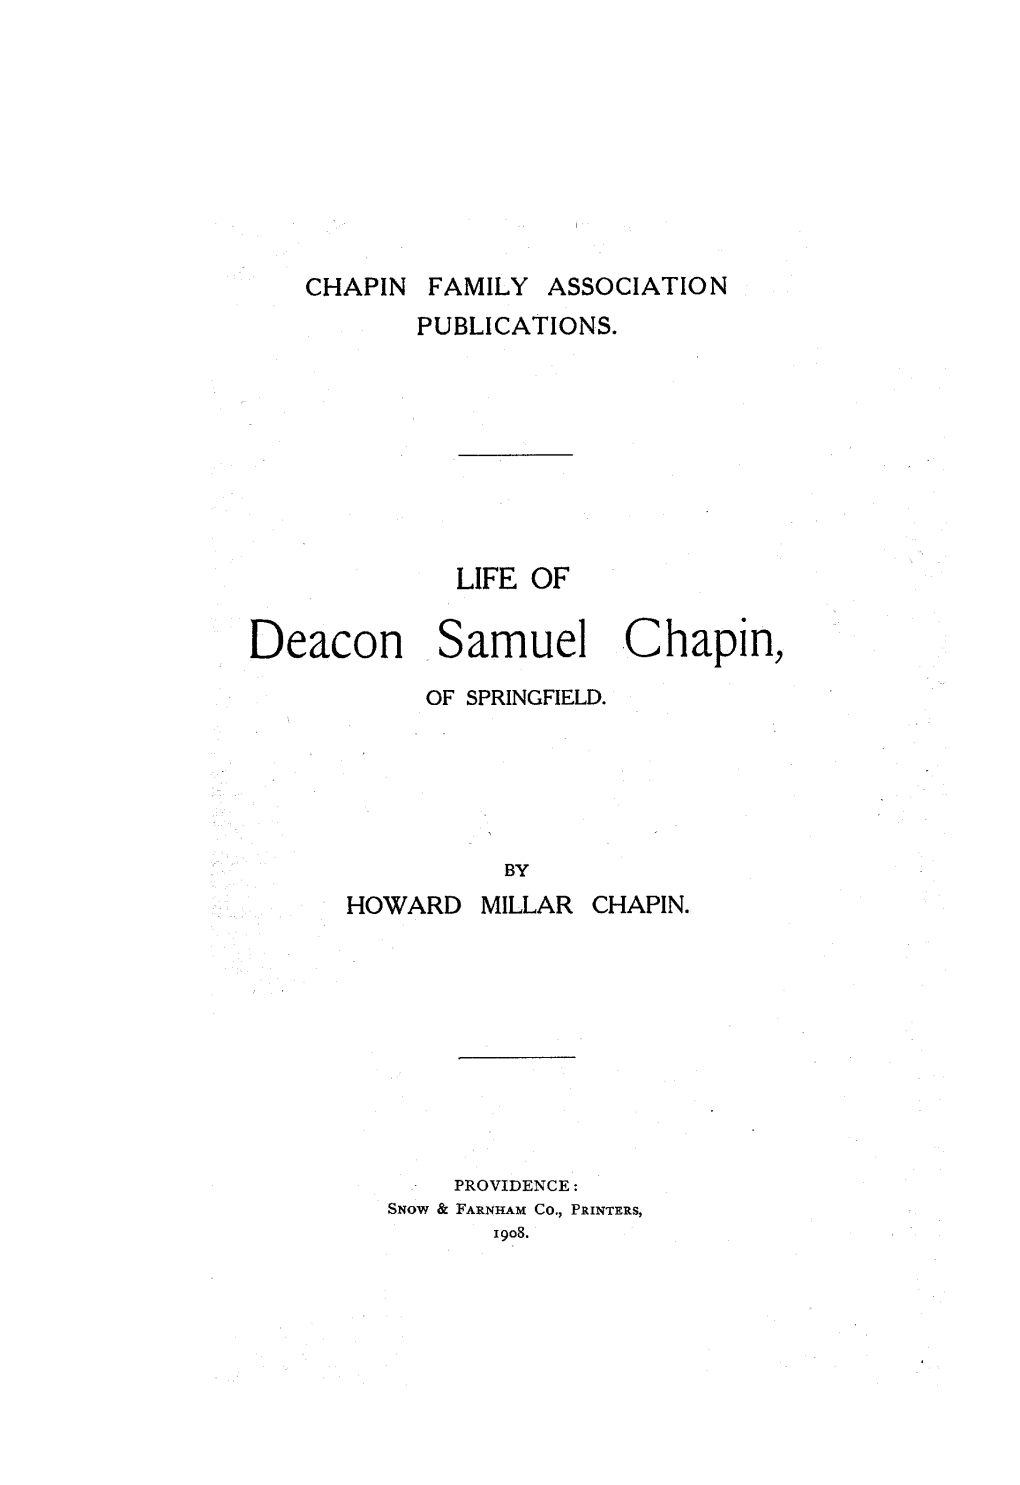 Deacon Samuel Chapin, of SPRINGFIELD